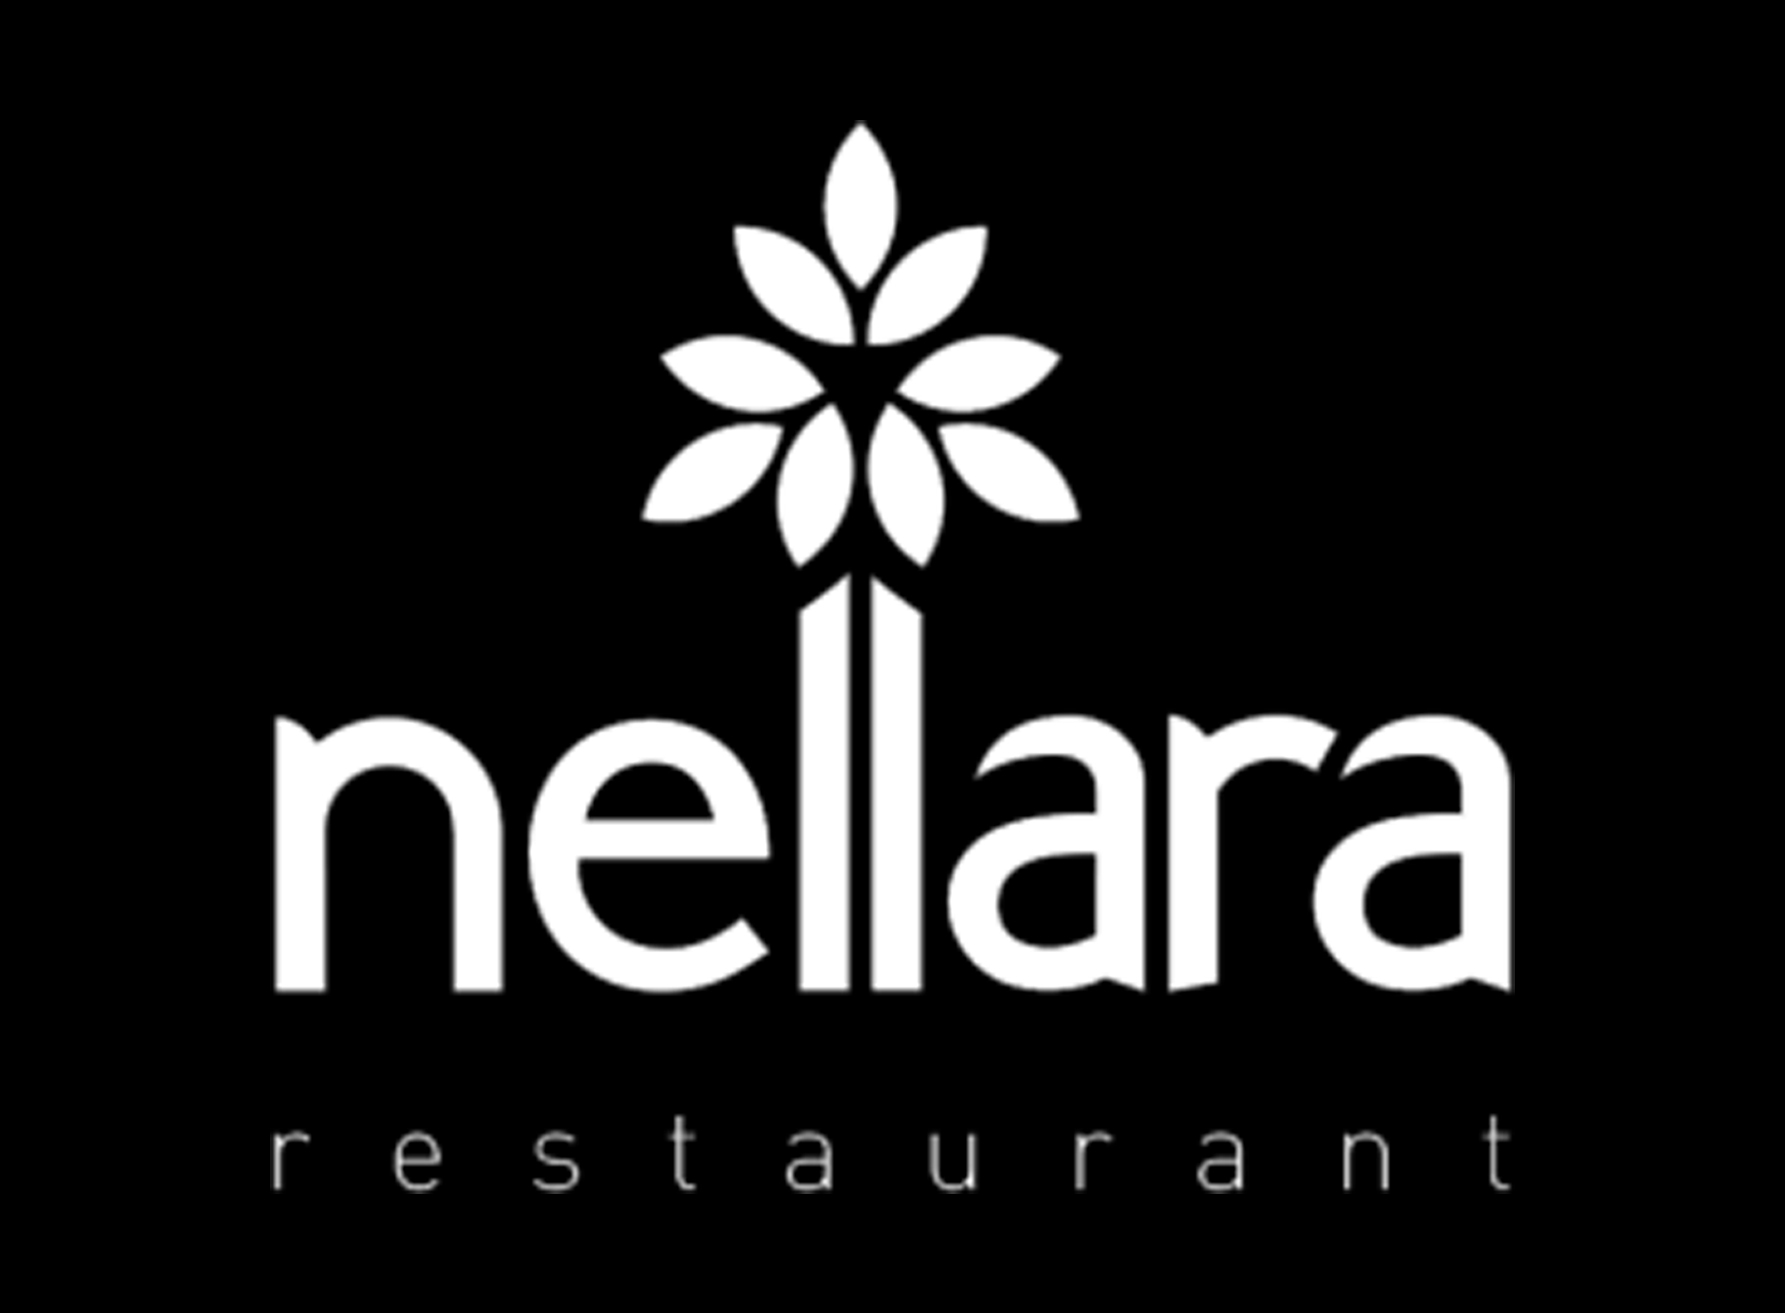 AD Agency Dubai client - Nellara